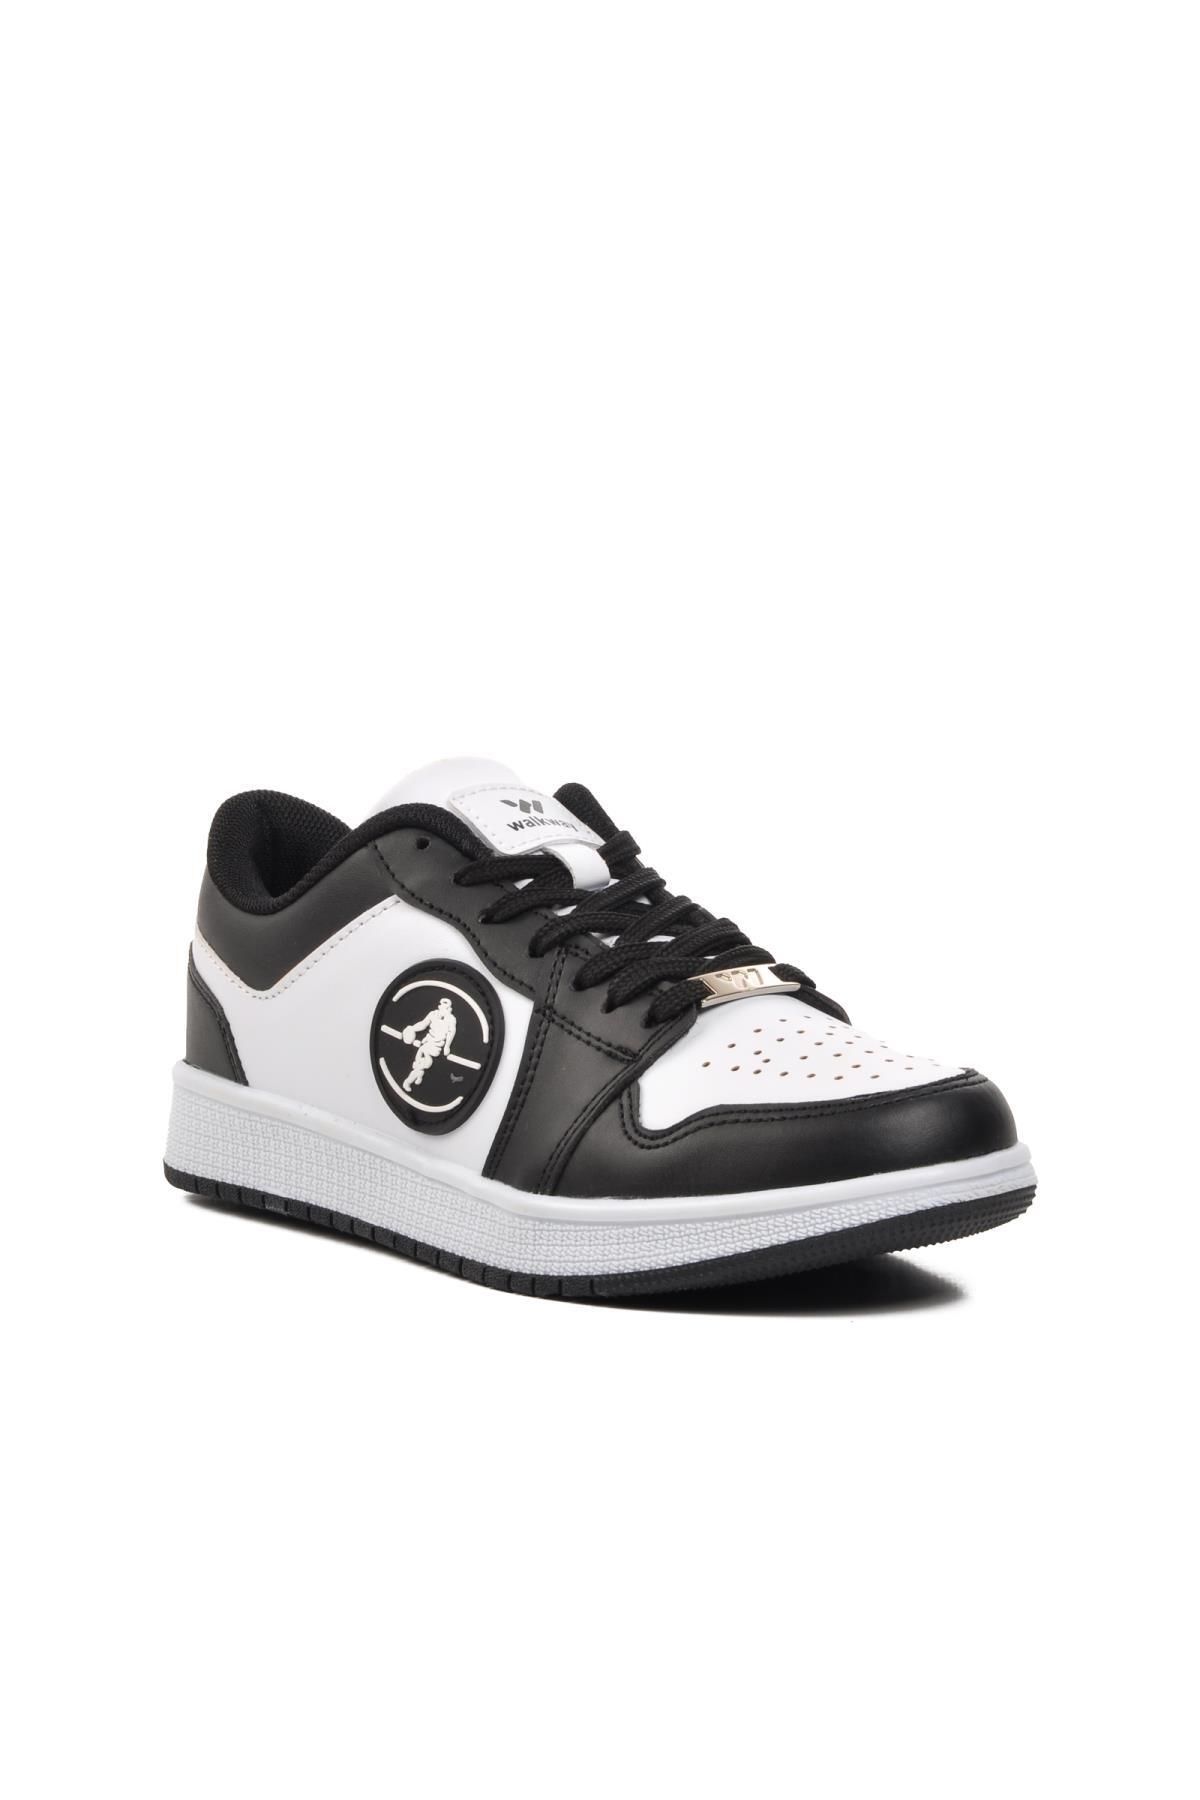 WALKWAY Sloga Siyah-Beyaz Unisex Sneaker